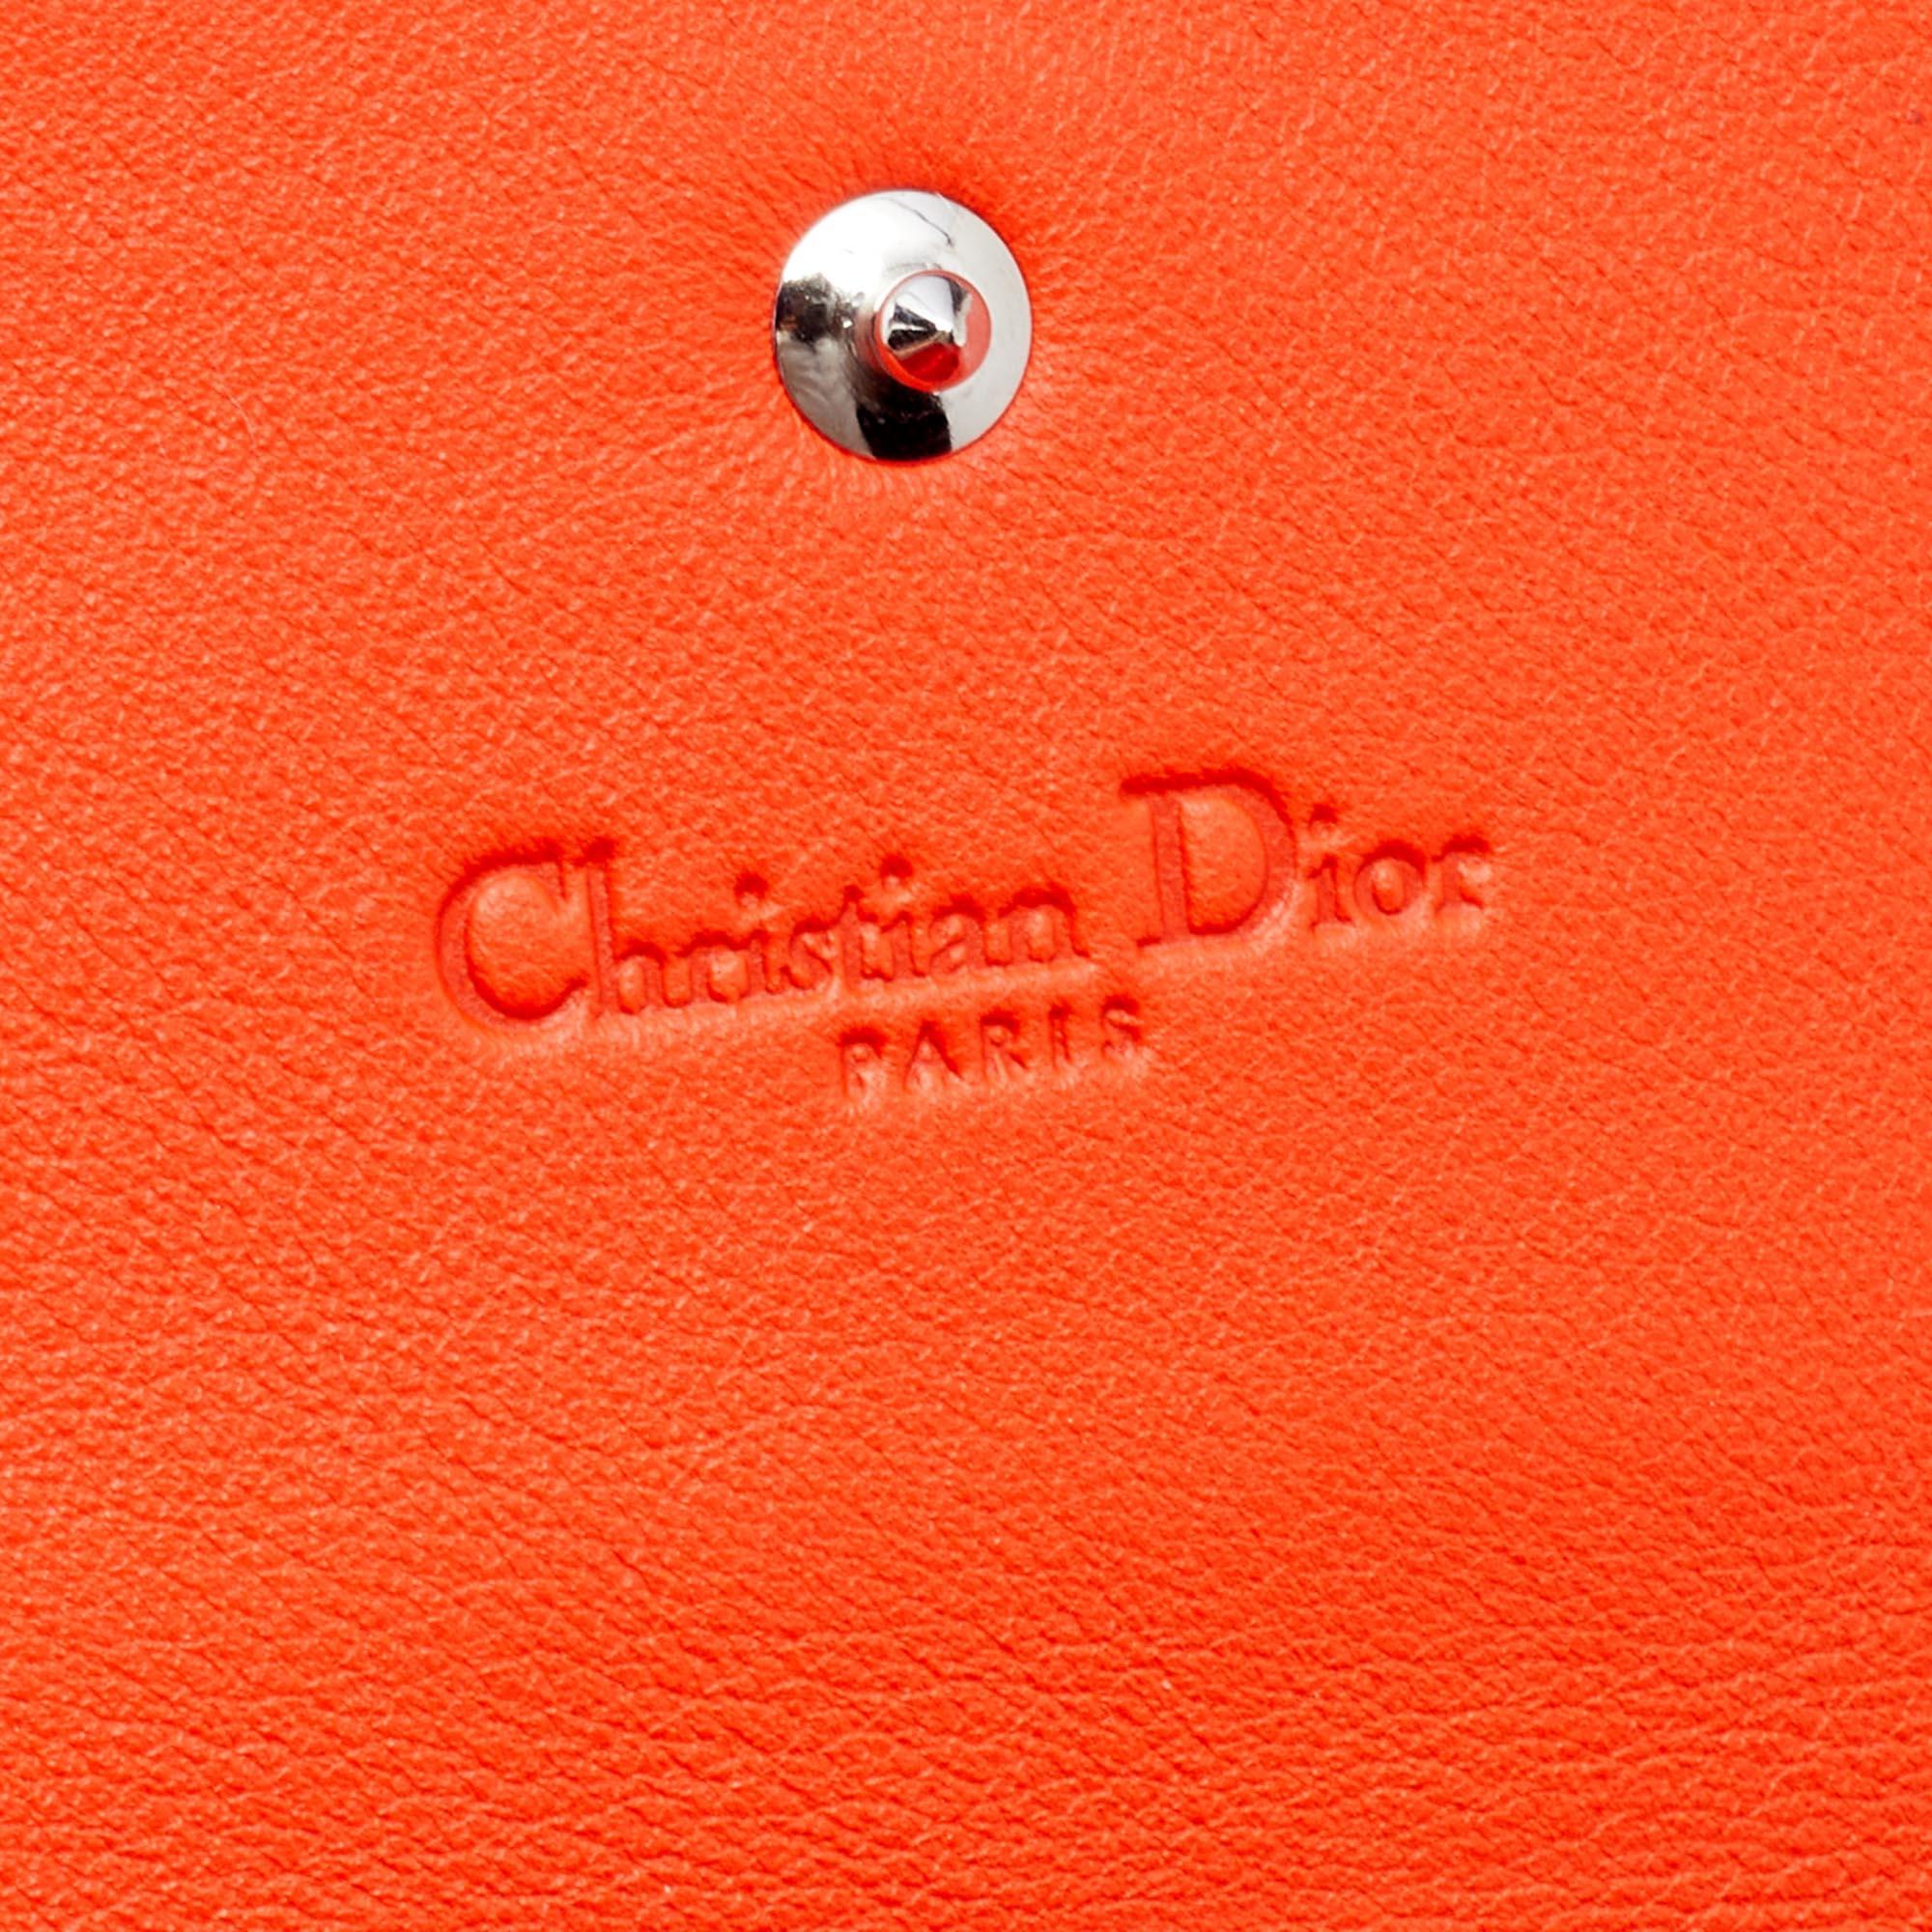 Dior Pink/Orange Leather Addict Rendez-Vous Wallet on Chain 2